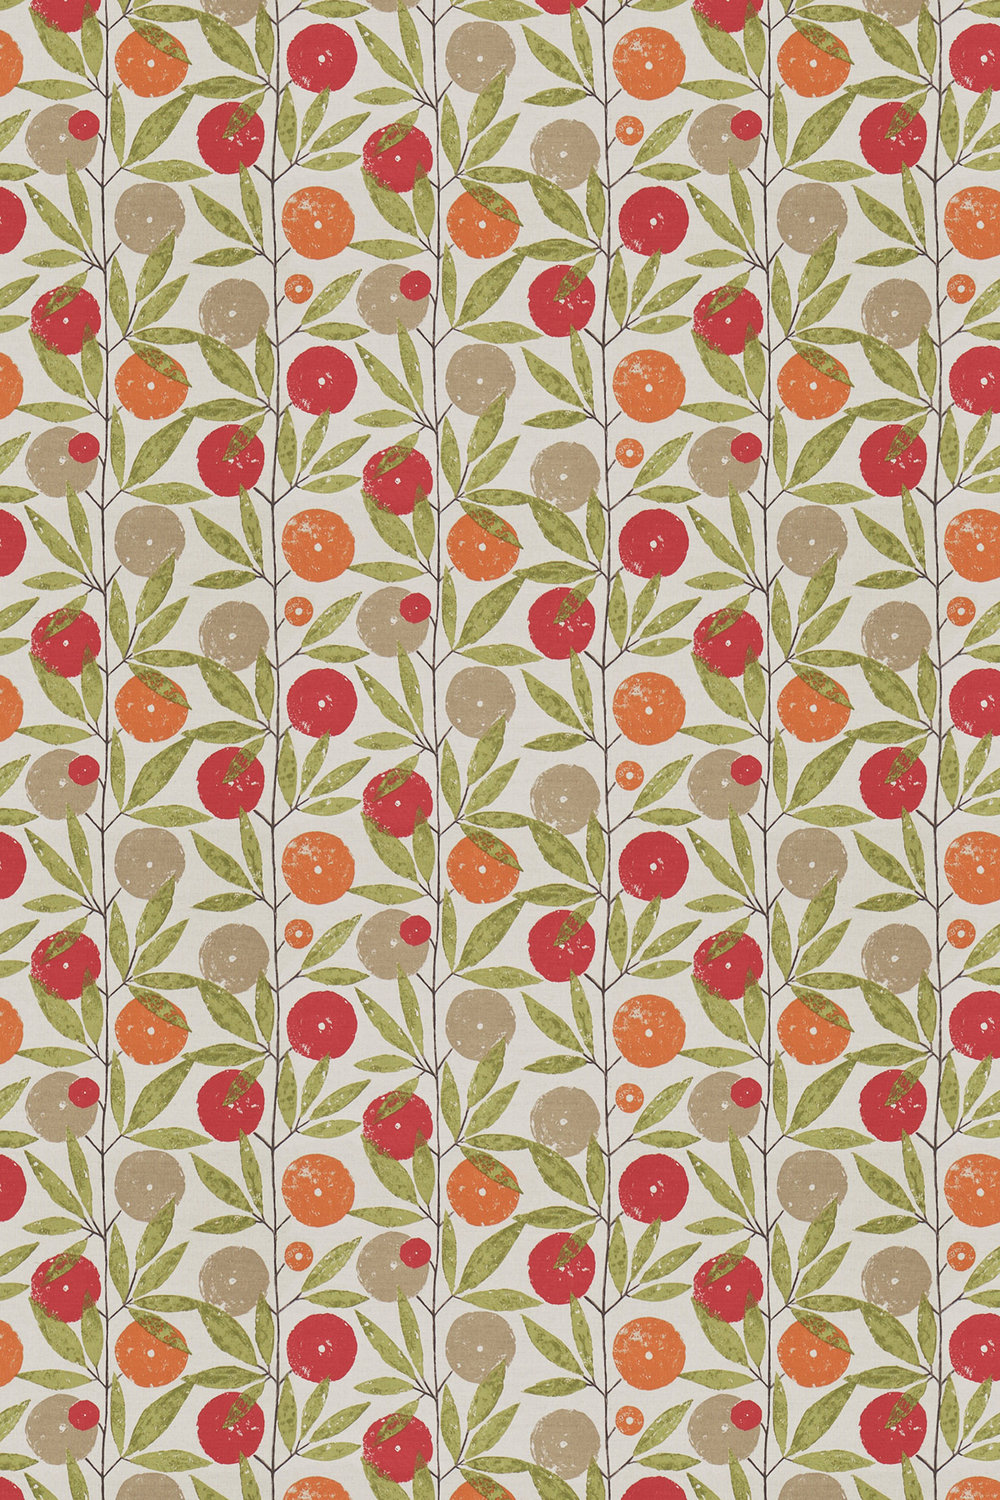 Blomma Fabric - Tangerine, Chilli and Citrus - by Scion